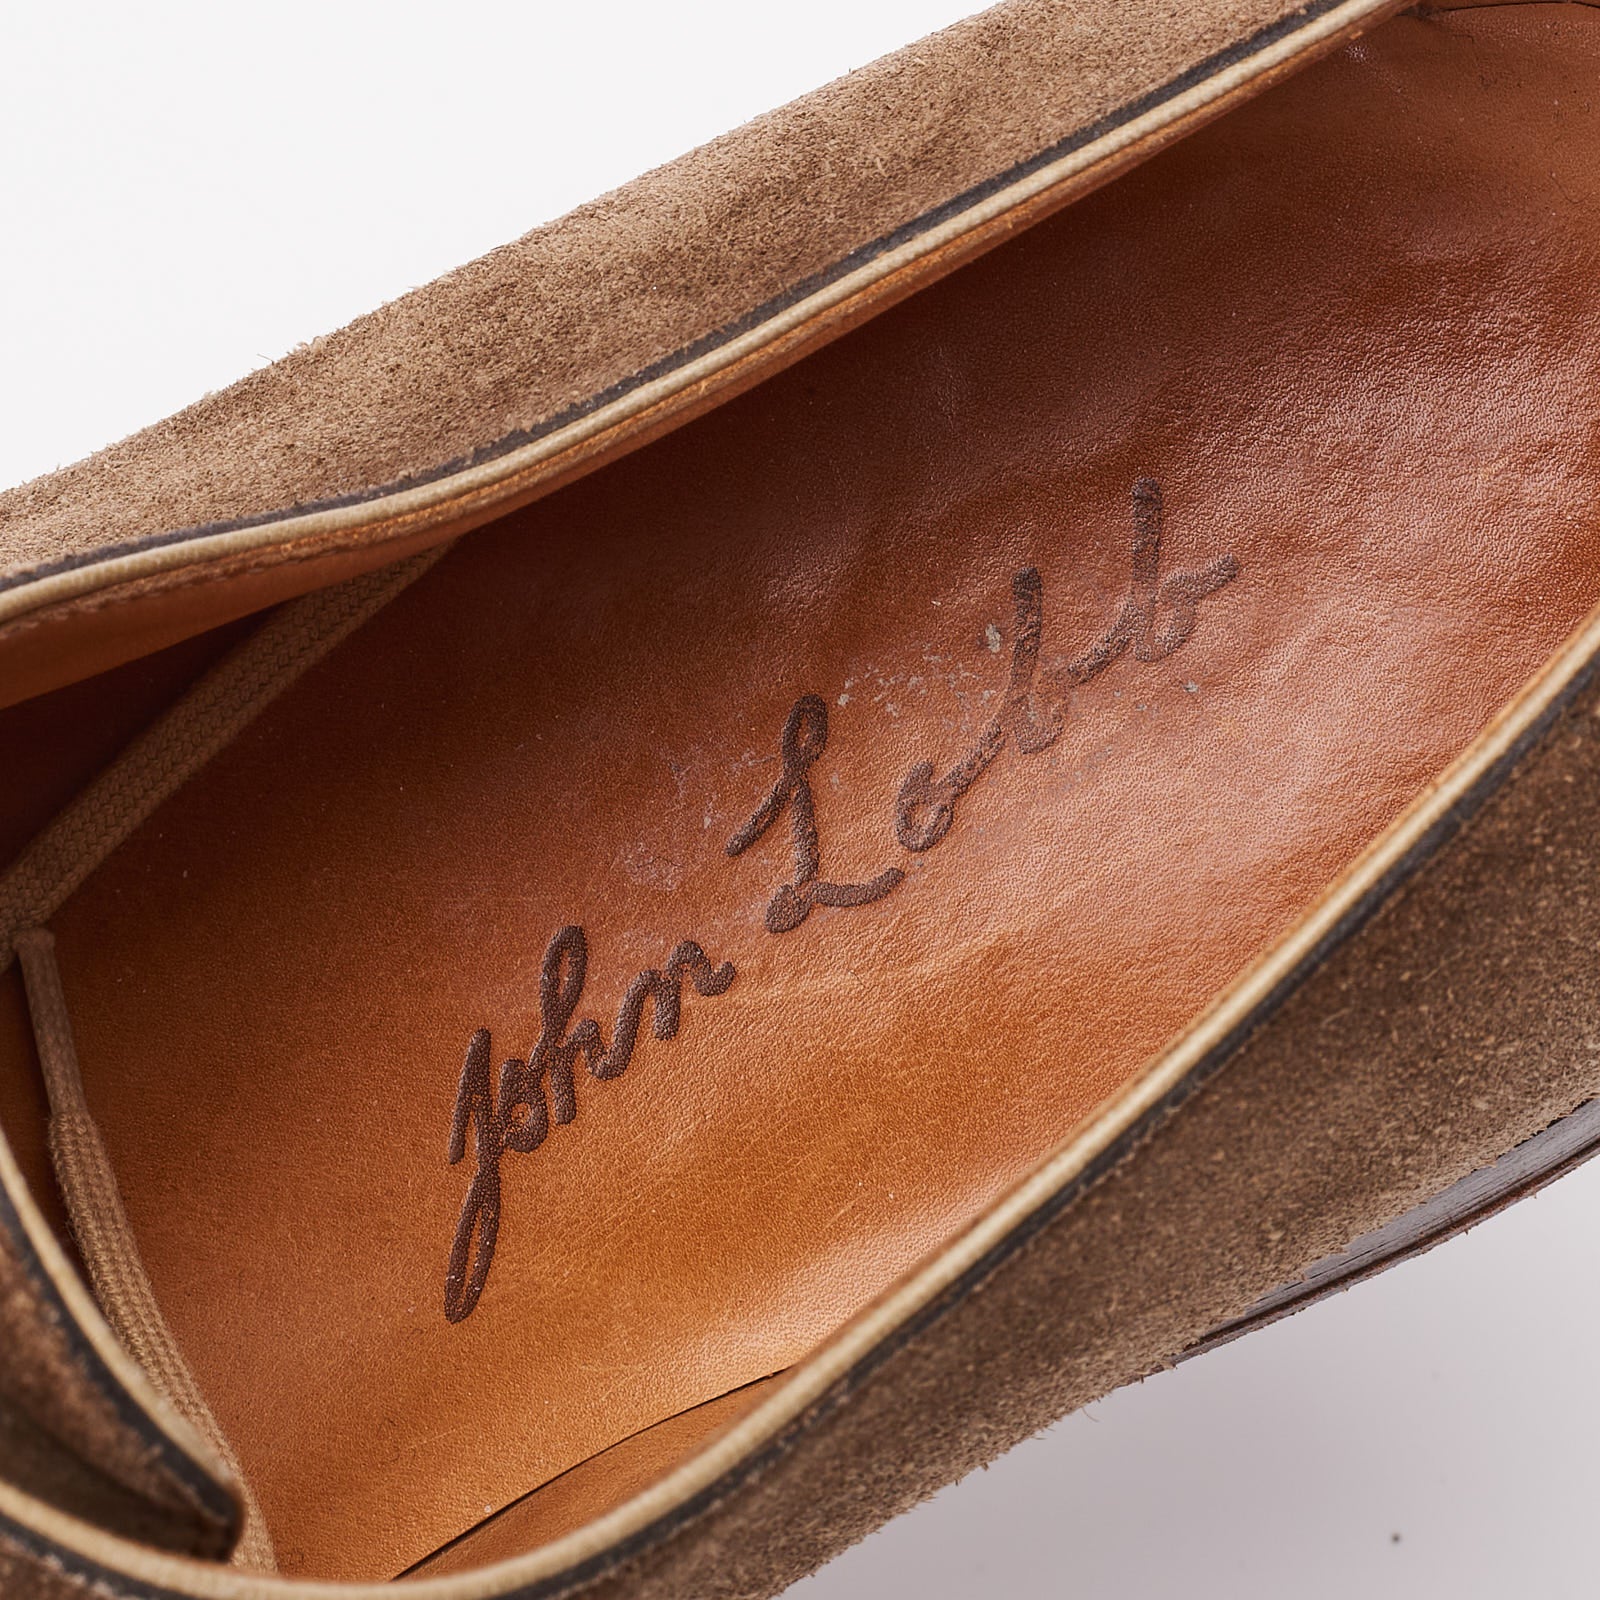 JOHN LOBB Paris Bespoke Olive Suede Calf Leather 5 Eyelet Derby Shoes UK 10 US 11 JOHN LOBB